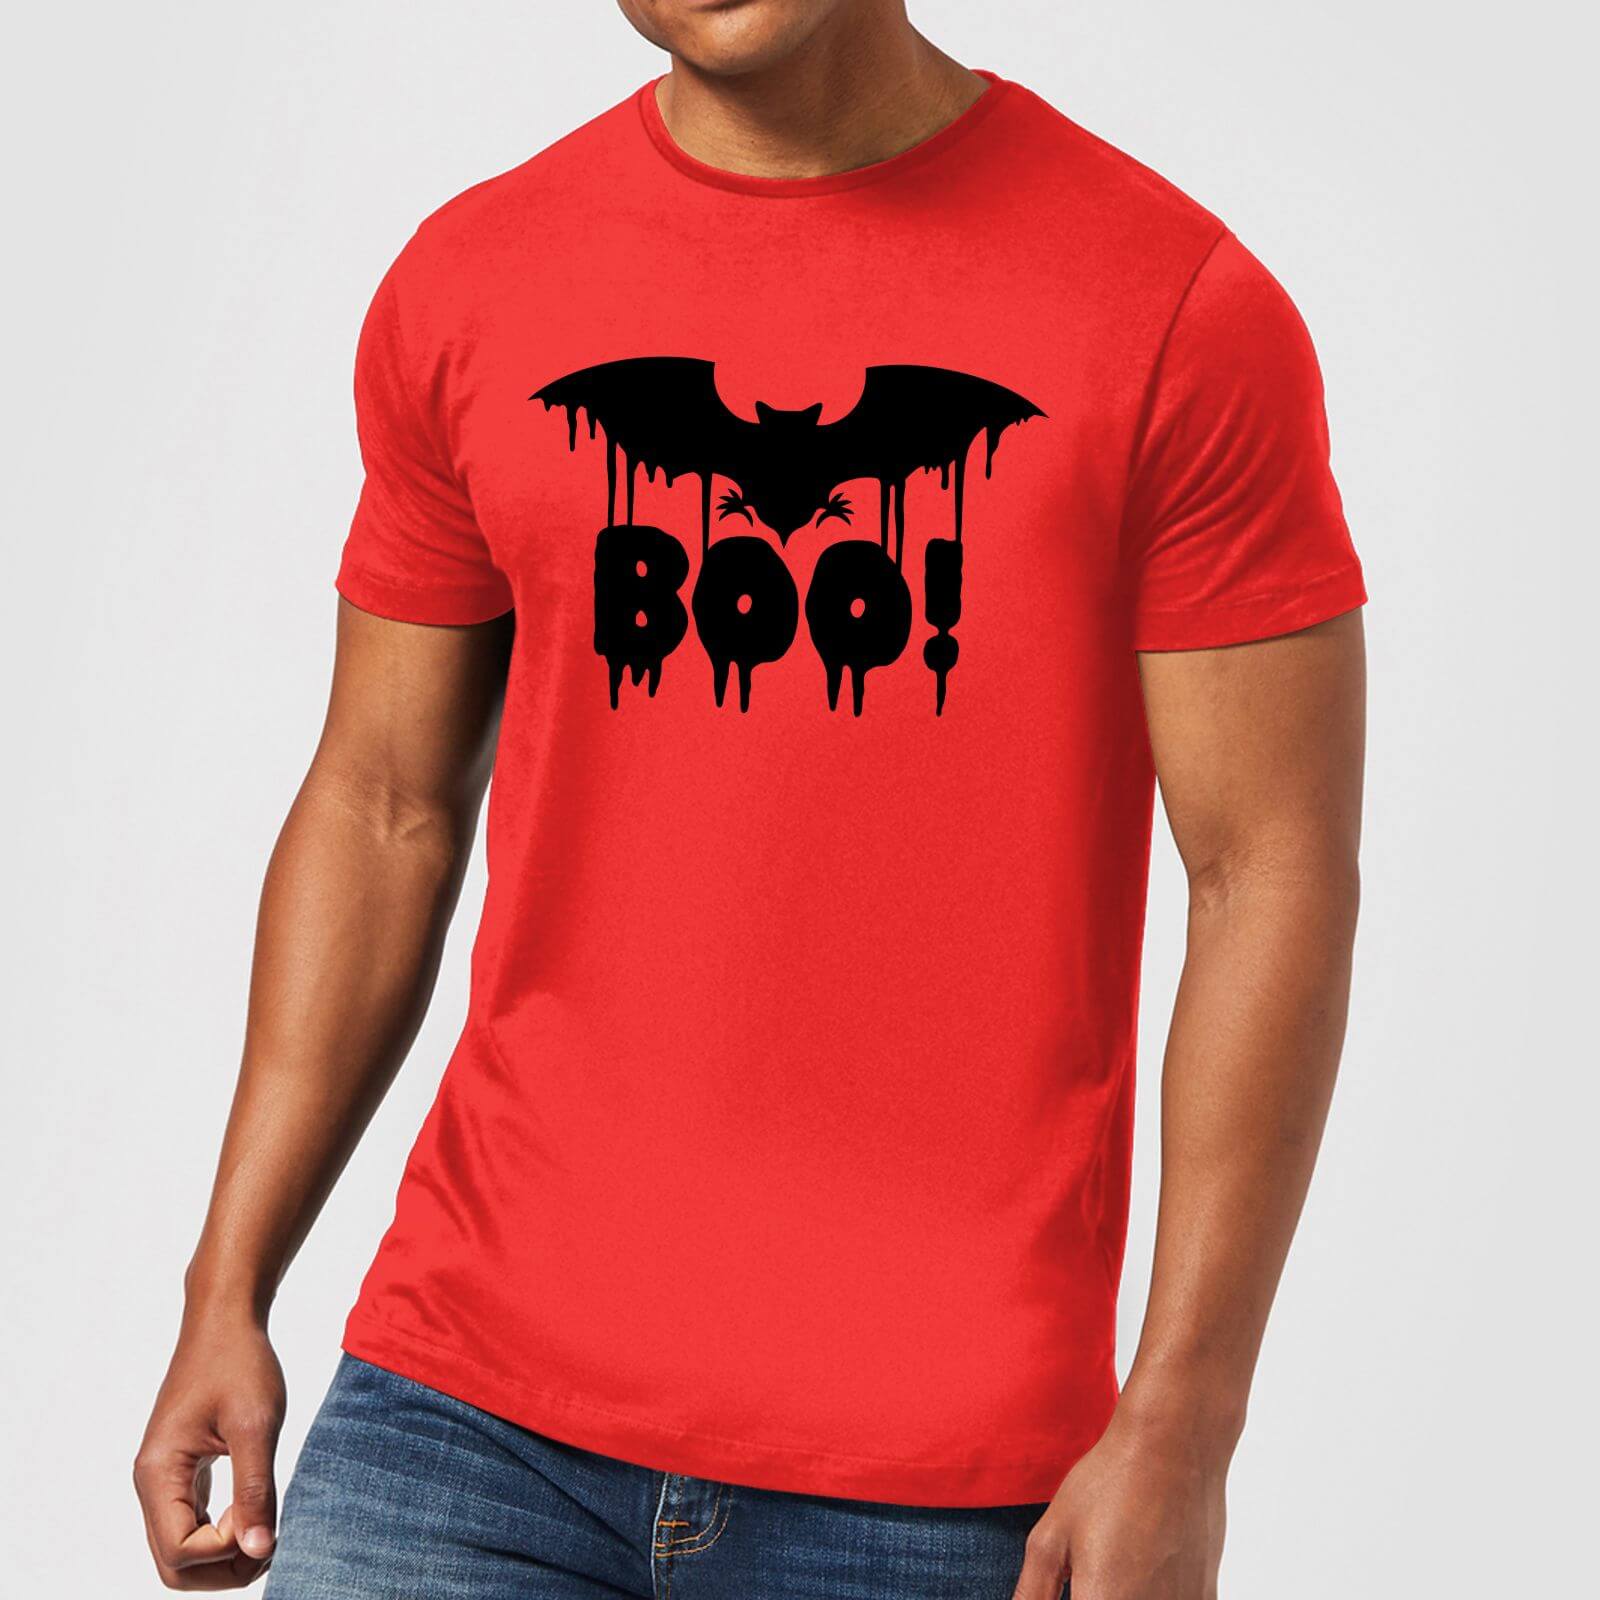 Boo Bat Men's T-Shirt - Red - M - Red